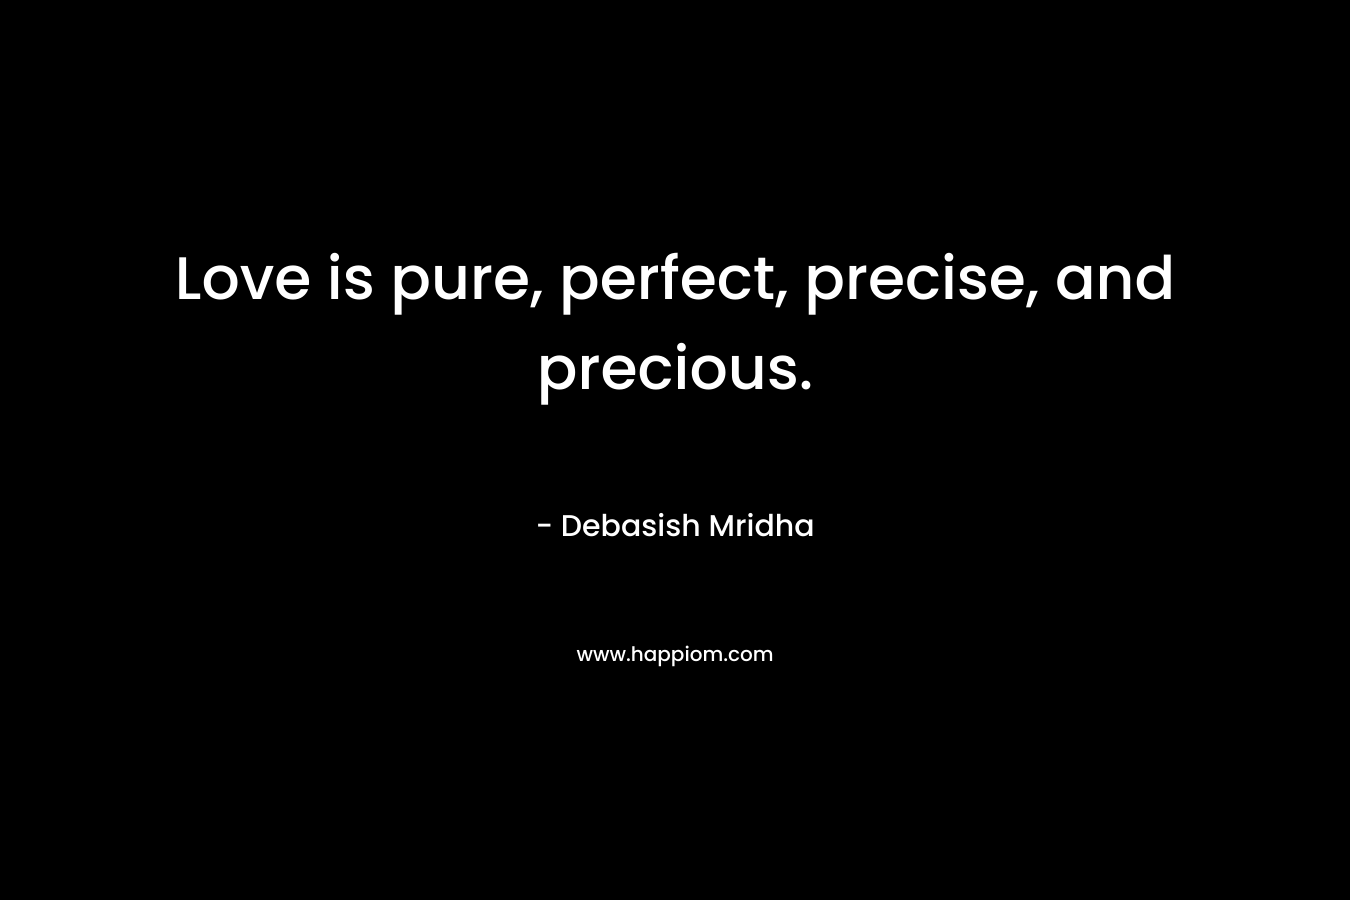 Love is pure, perfect, precise, and precious.